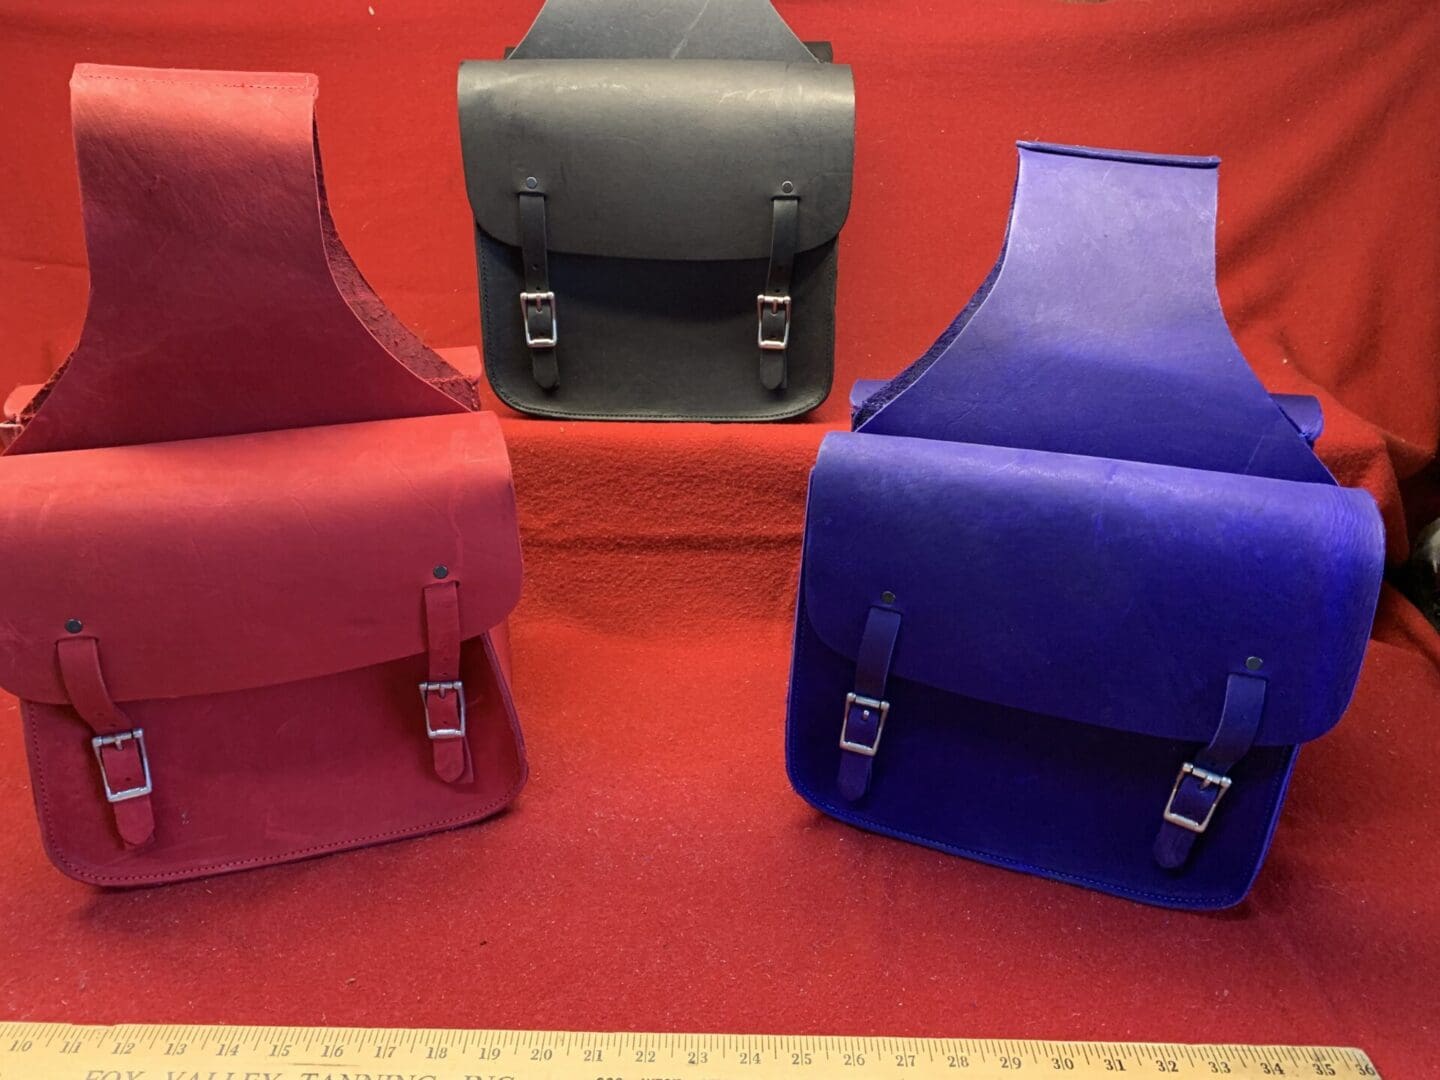 Handmade Leather Saddle Bags in Chrome Tan